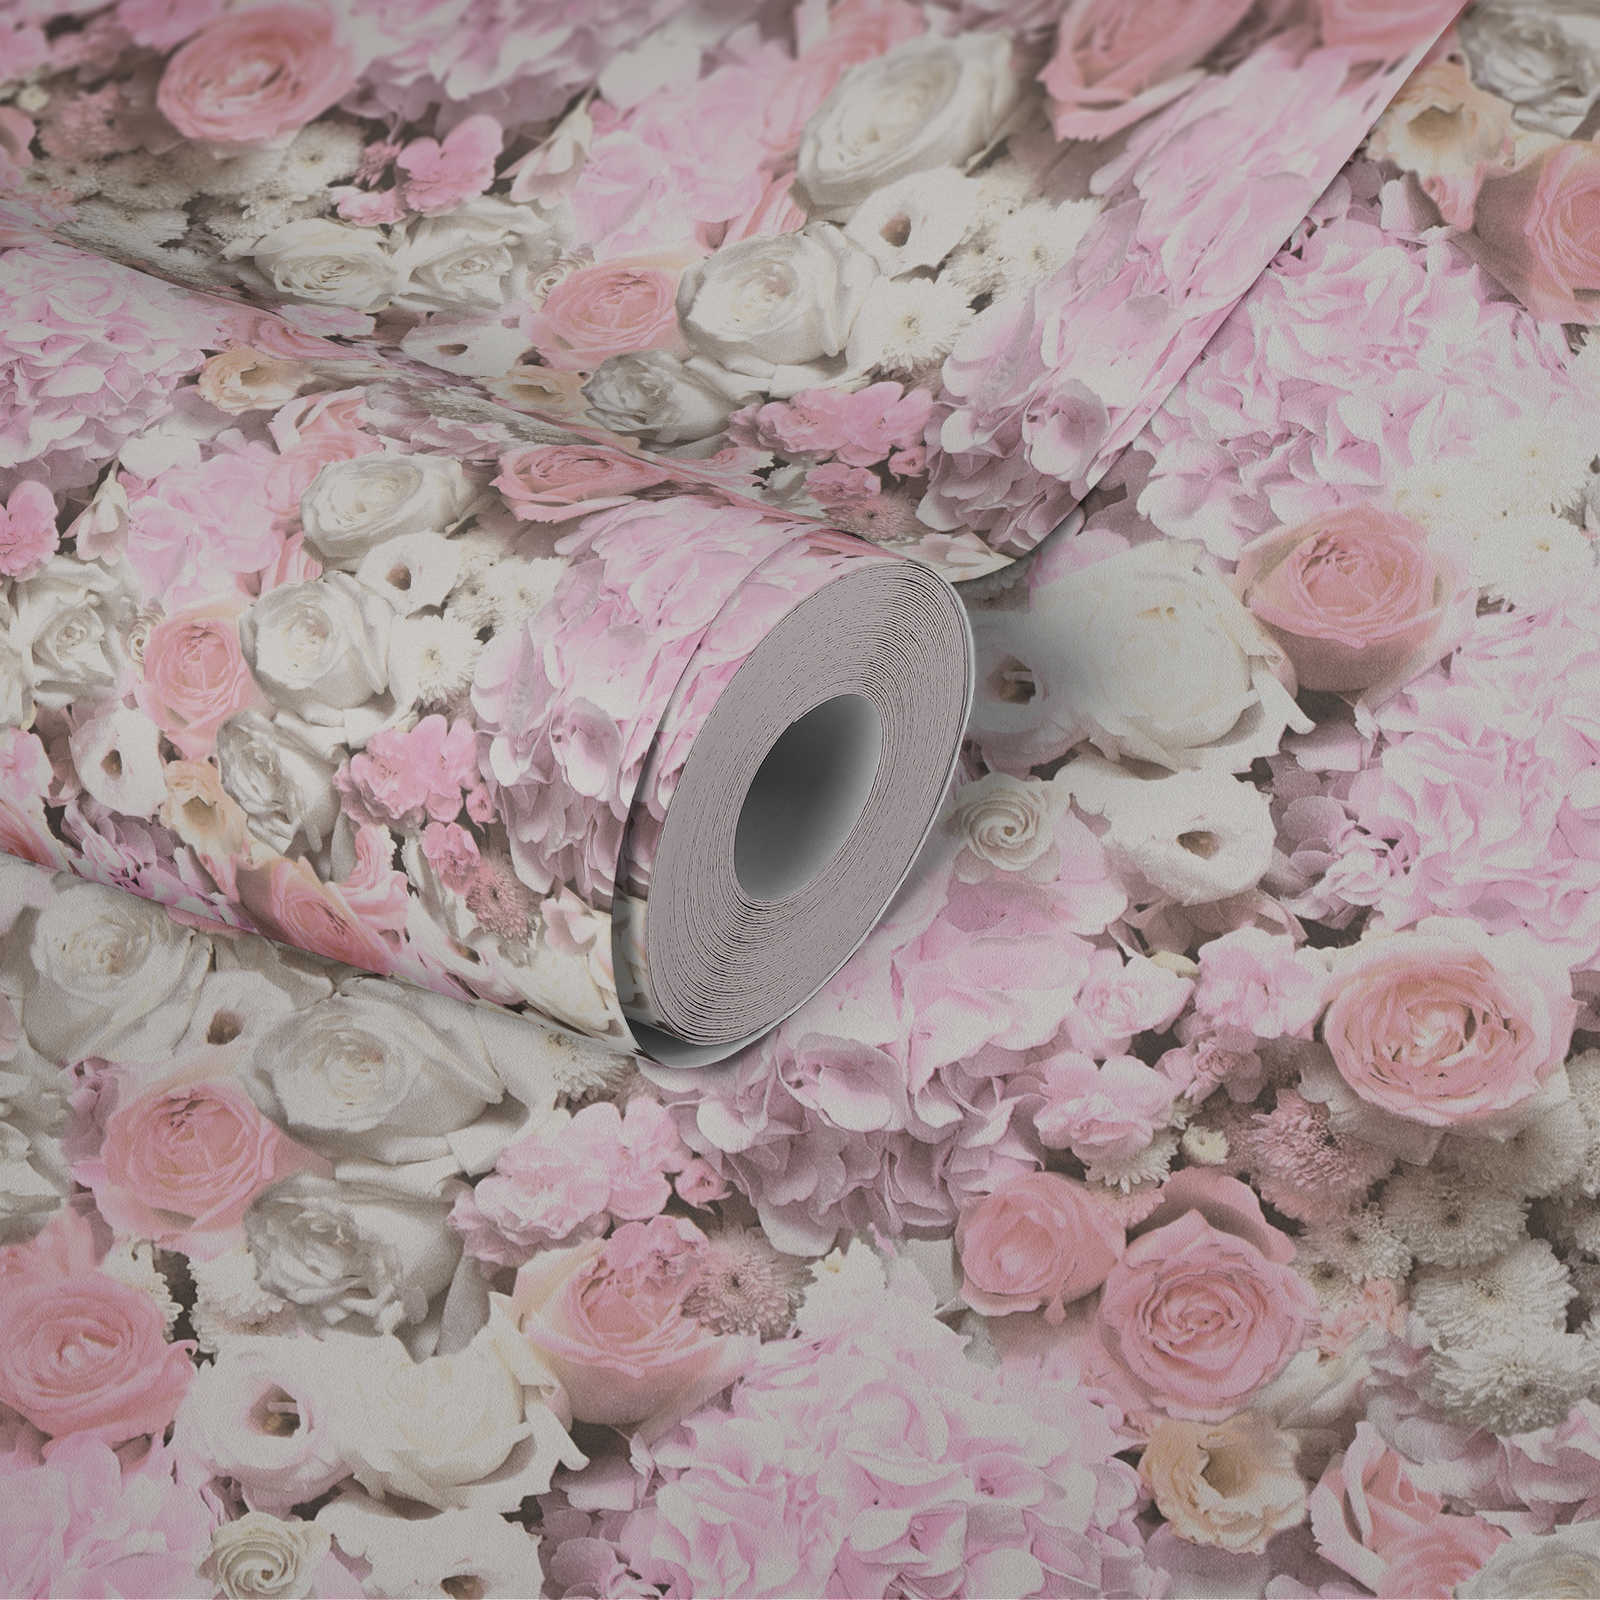             wallpaper roses & flowers pattern - pink, white
        